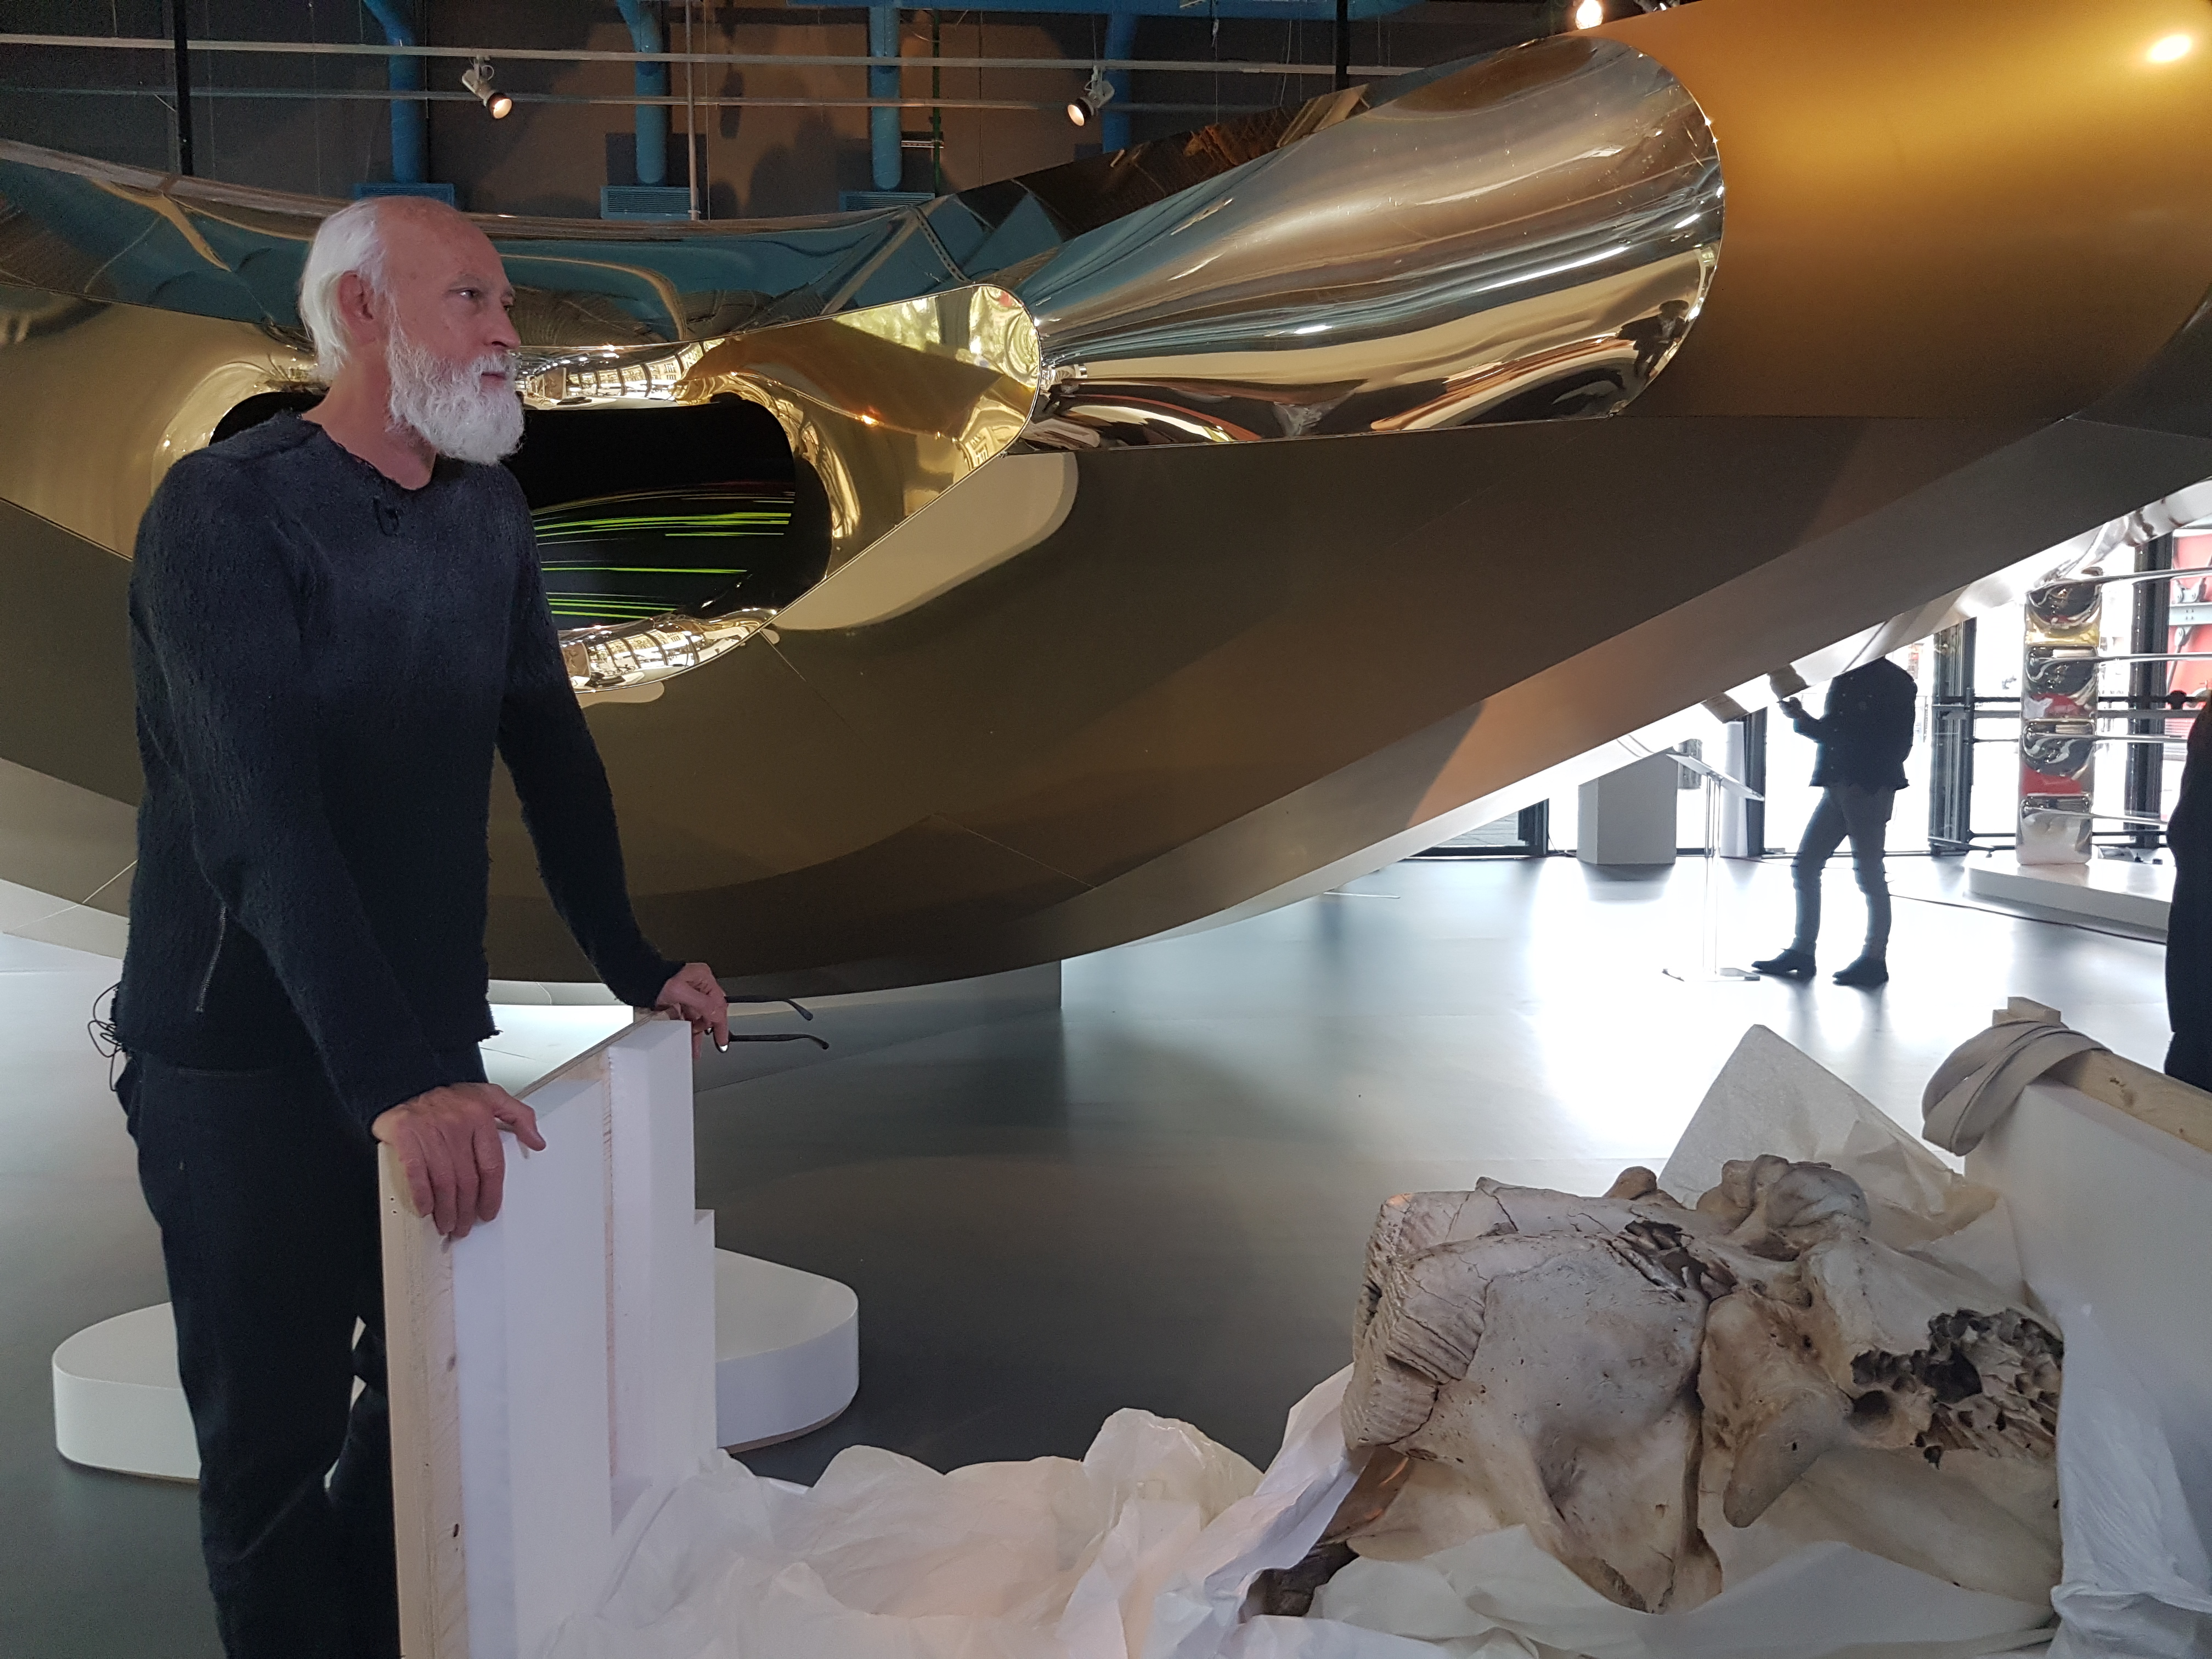 Ross Lovegrove Retrospective at Center Pompidou with BARRISOL®